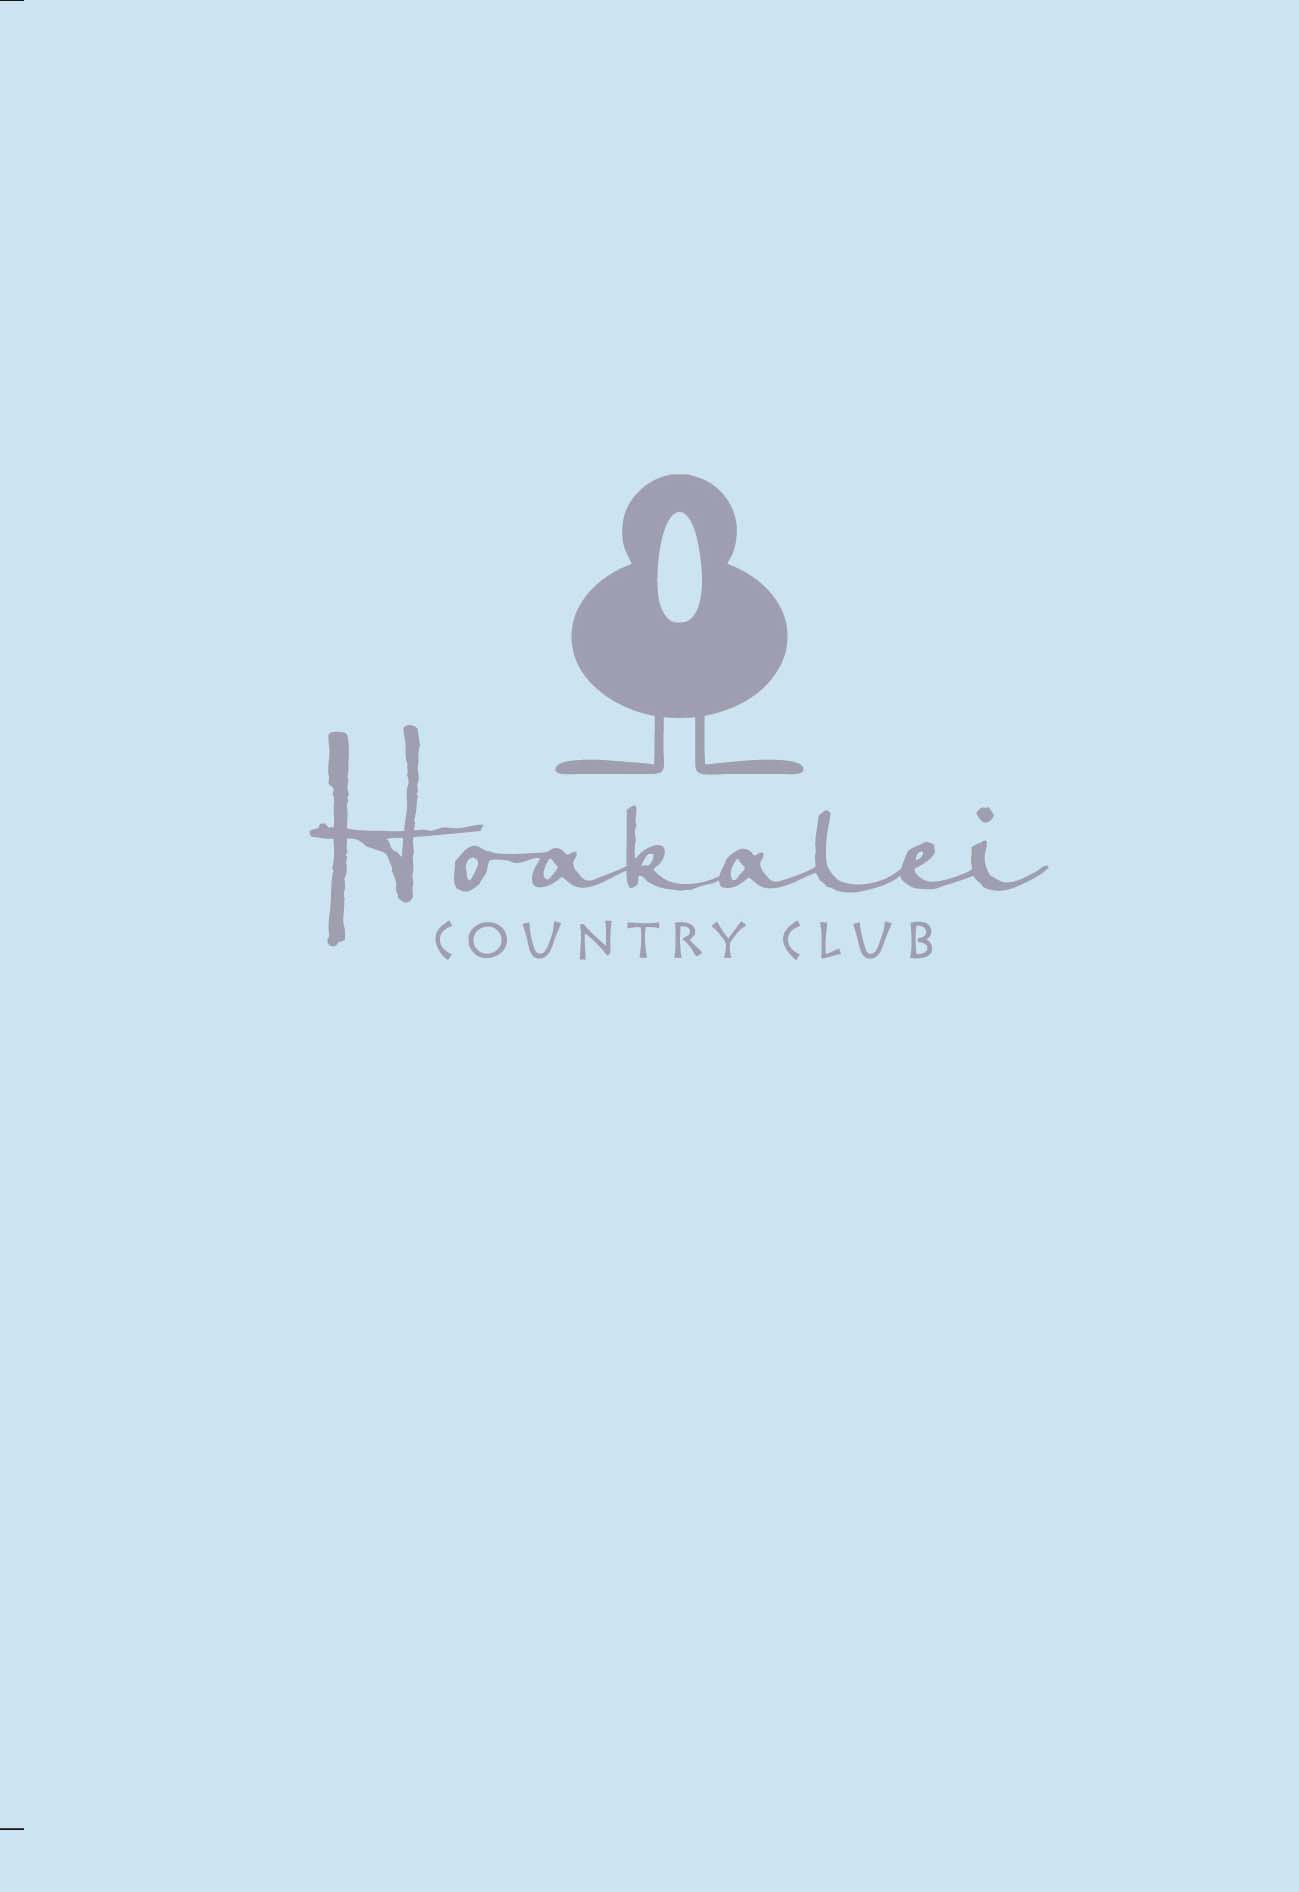 Hoakalei Country Club – B&W Tour